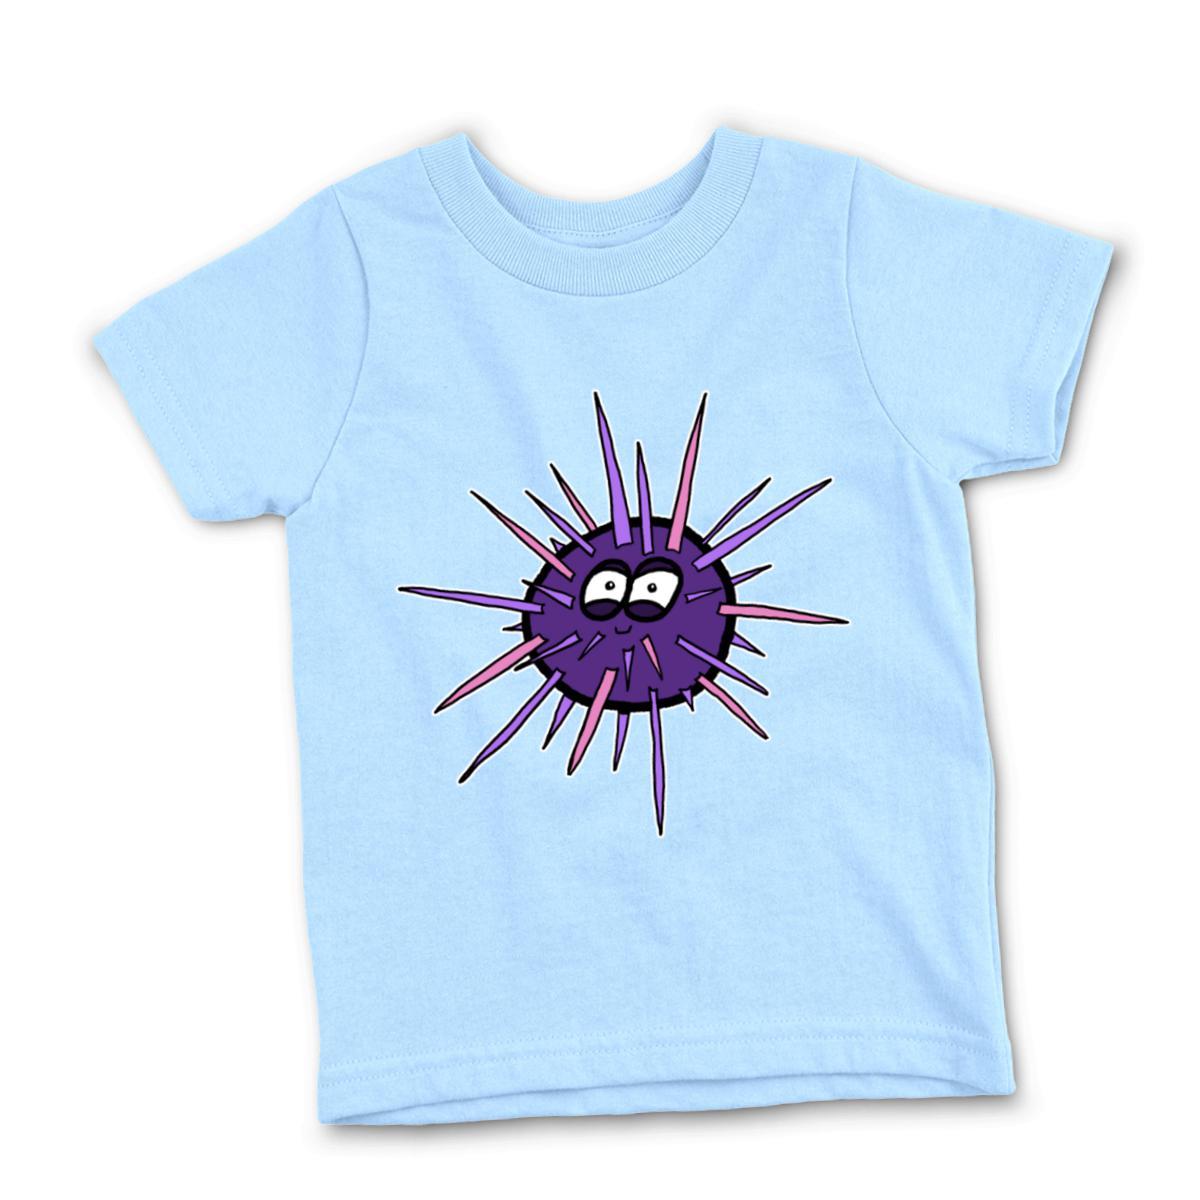 Sea Urchin Kid's Tee Small light-blue